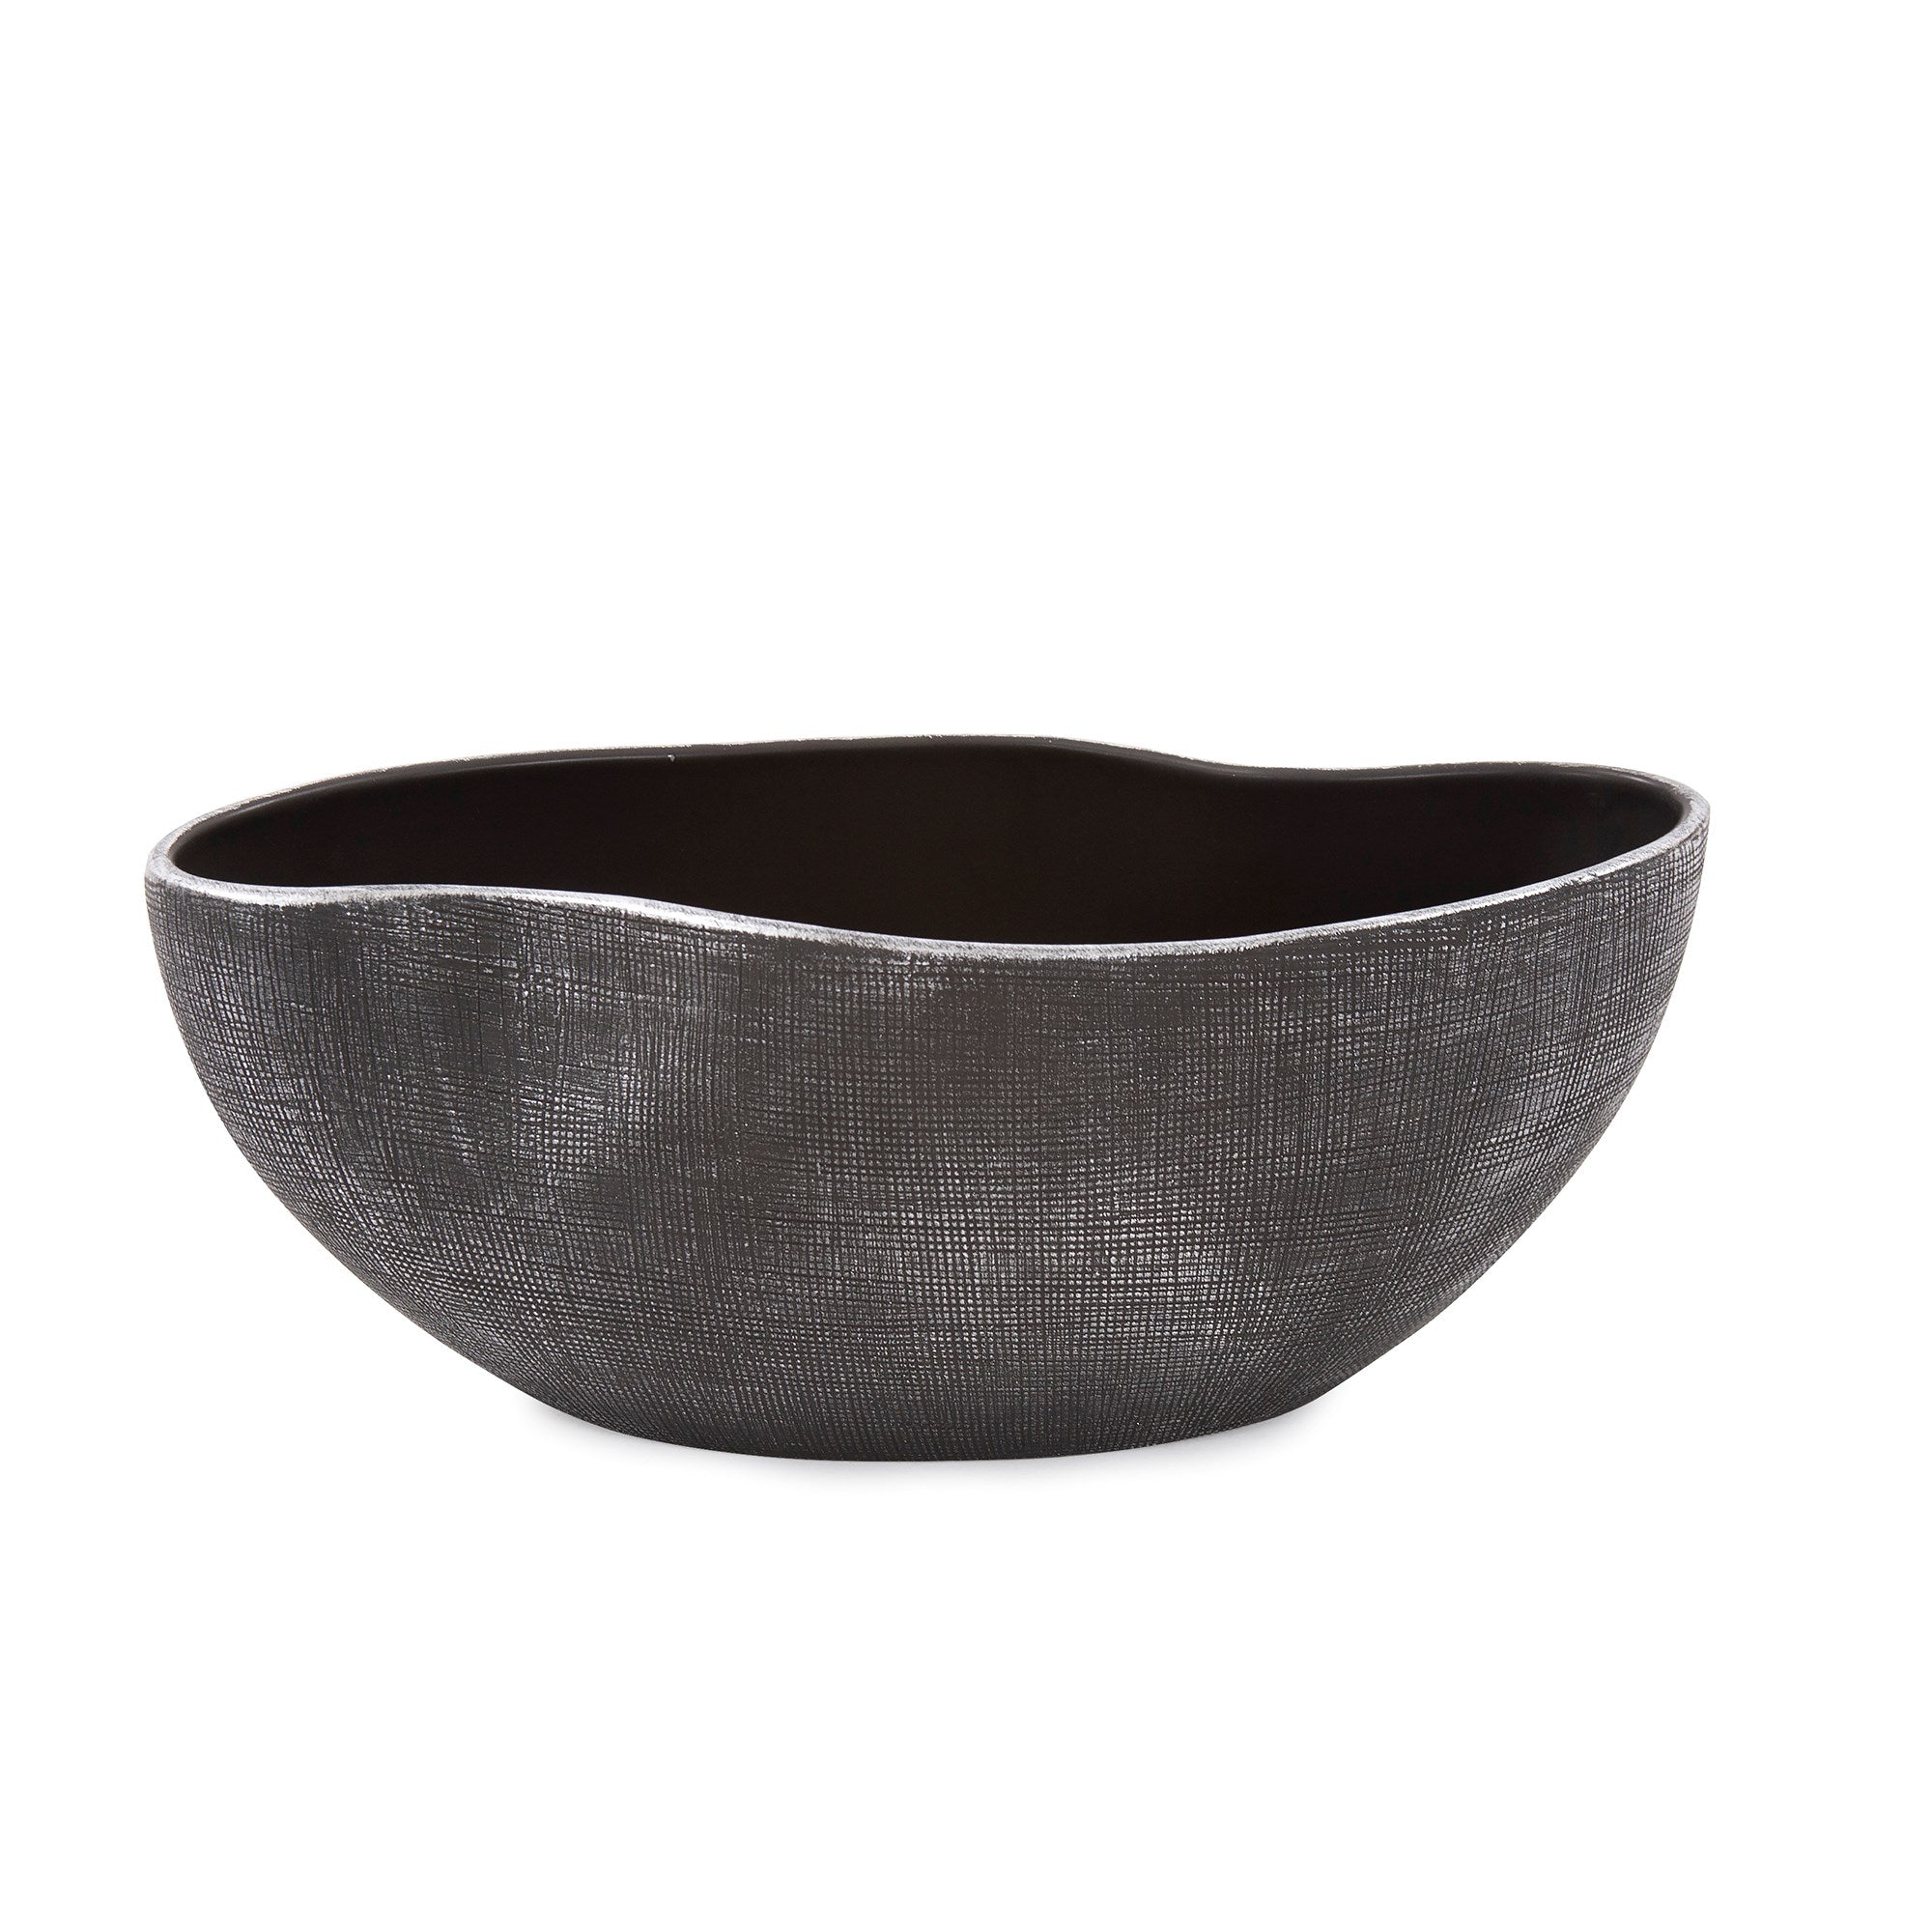 Textured Black Free Formed Ceramic Bowl